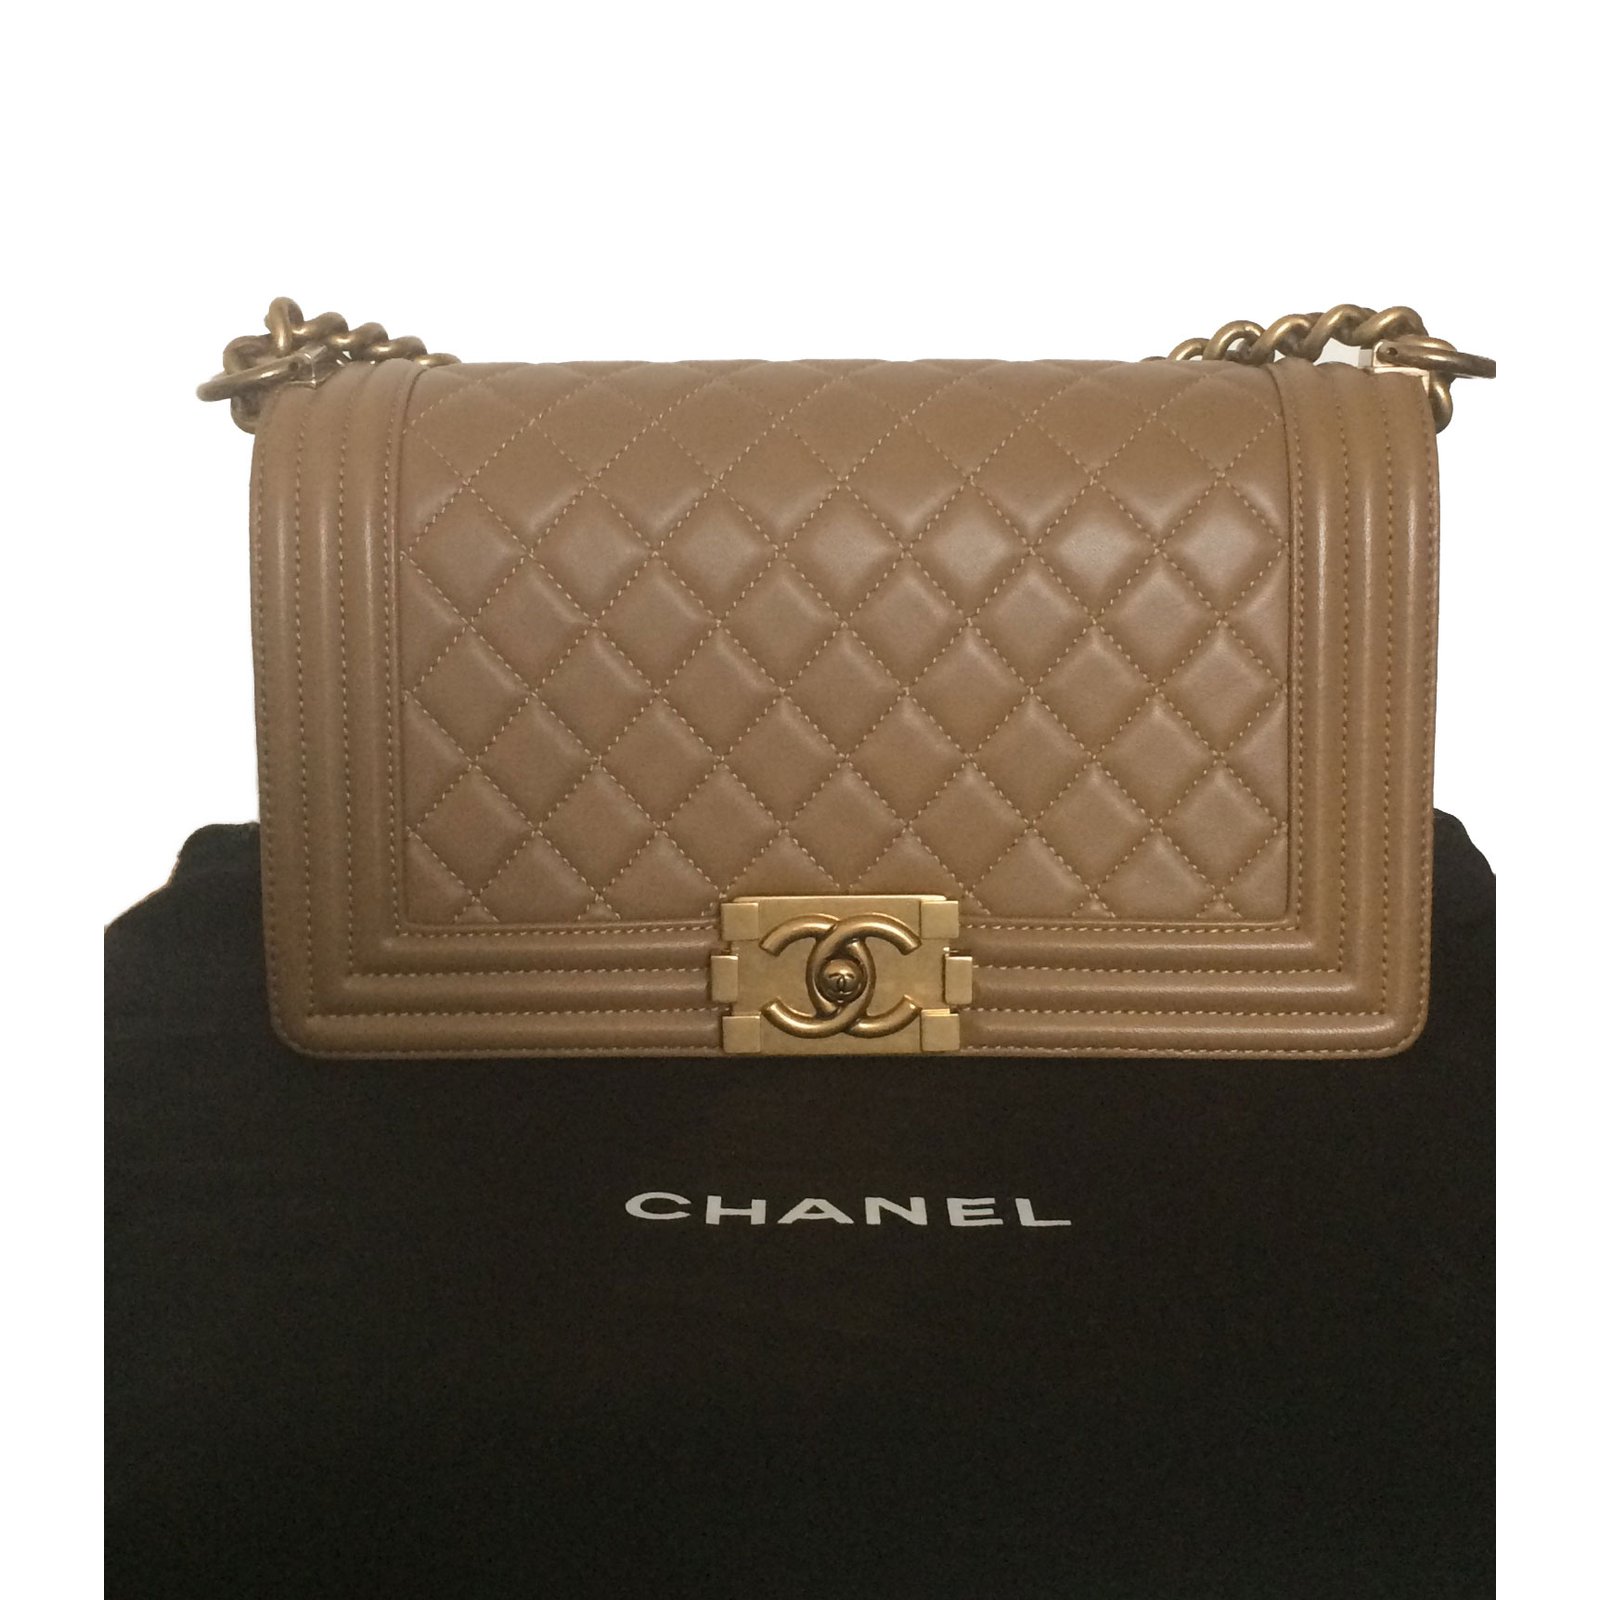 Chanel, Small Boy Bag, Cream Colour